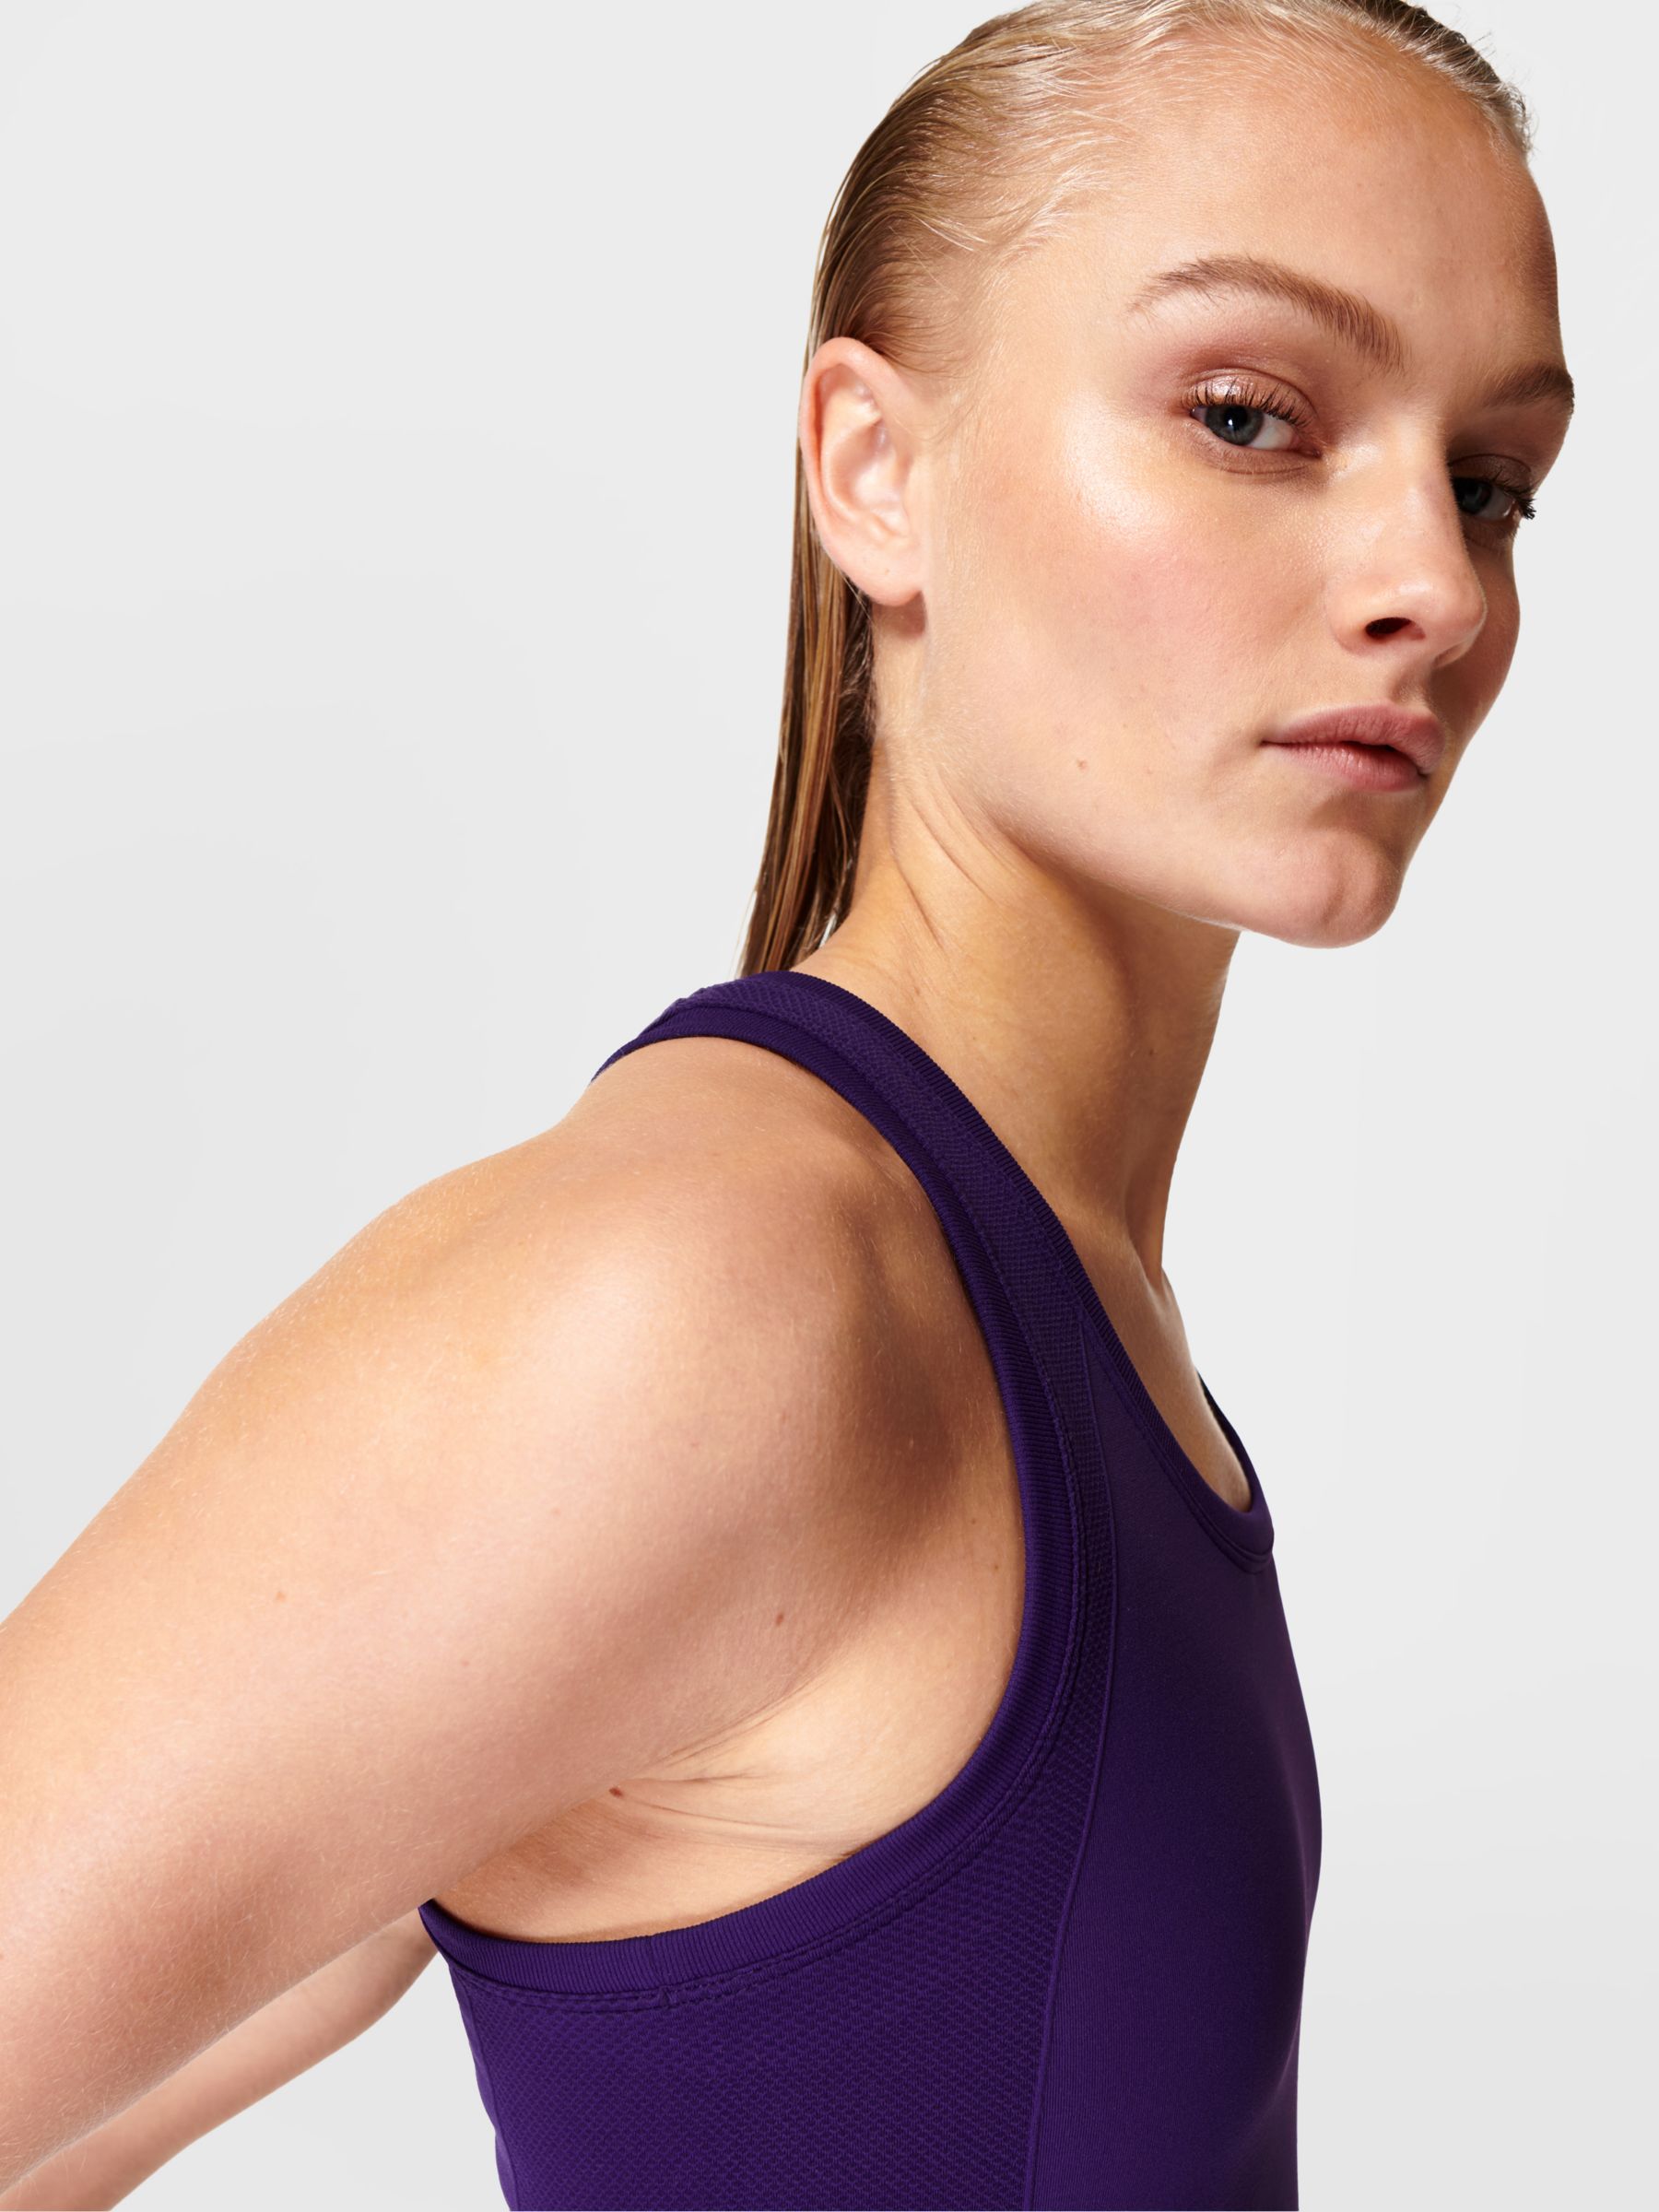 Sweaty Betty Athlete Seamless Workout Tank Top, Celestial Purple, XS